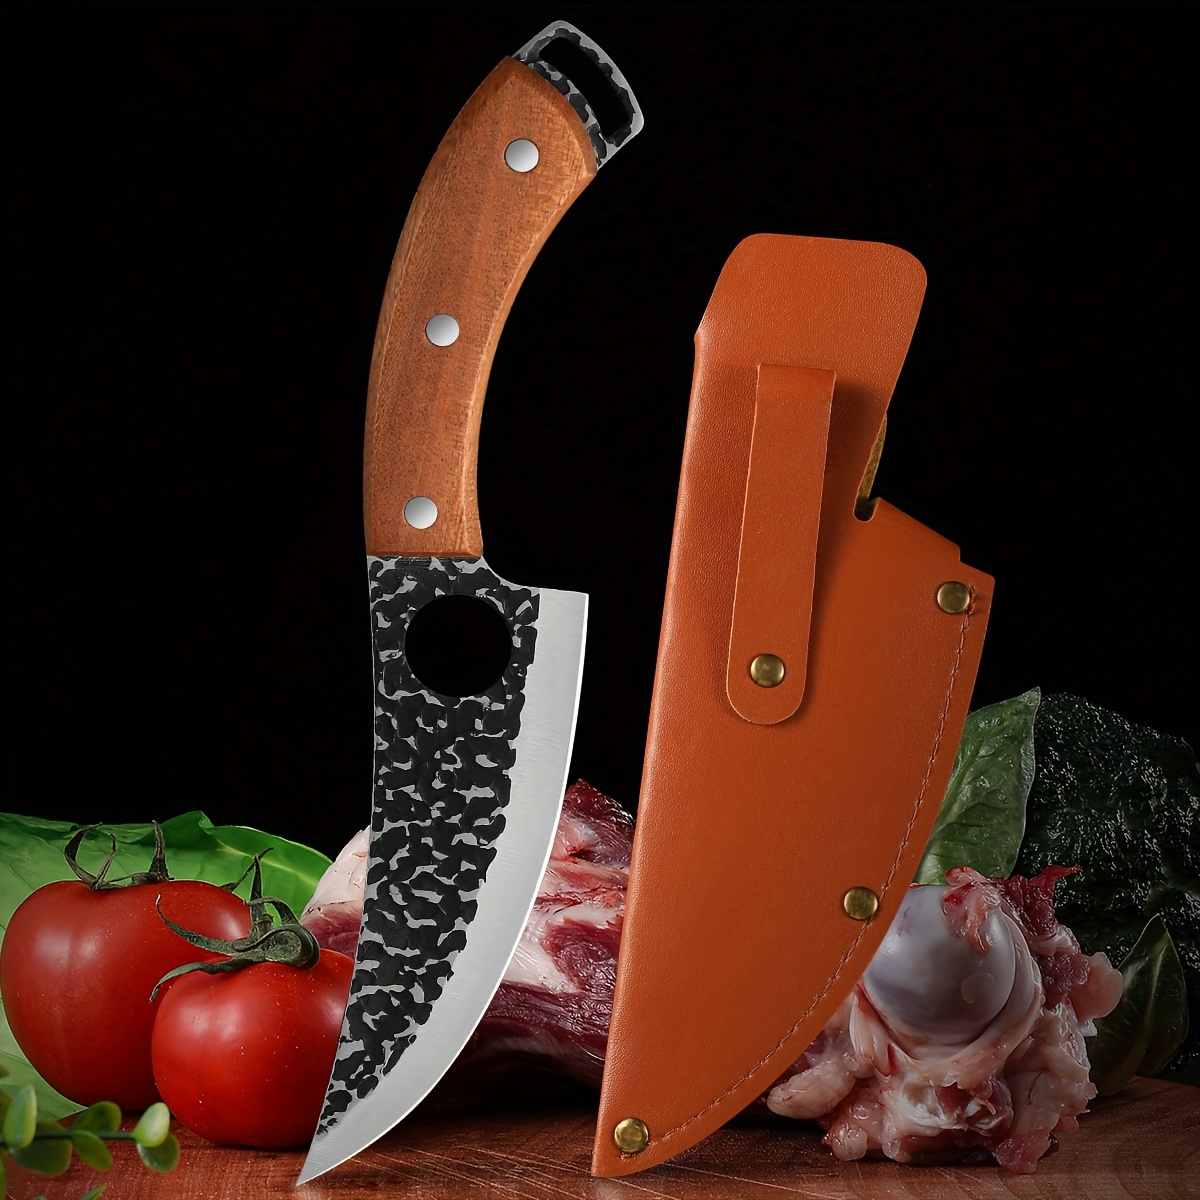 Knife, Forged Knife, Deboning Knife With Hole, Multi-functional